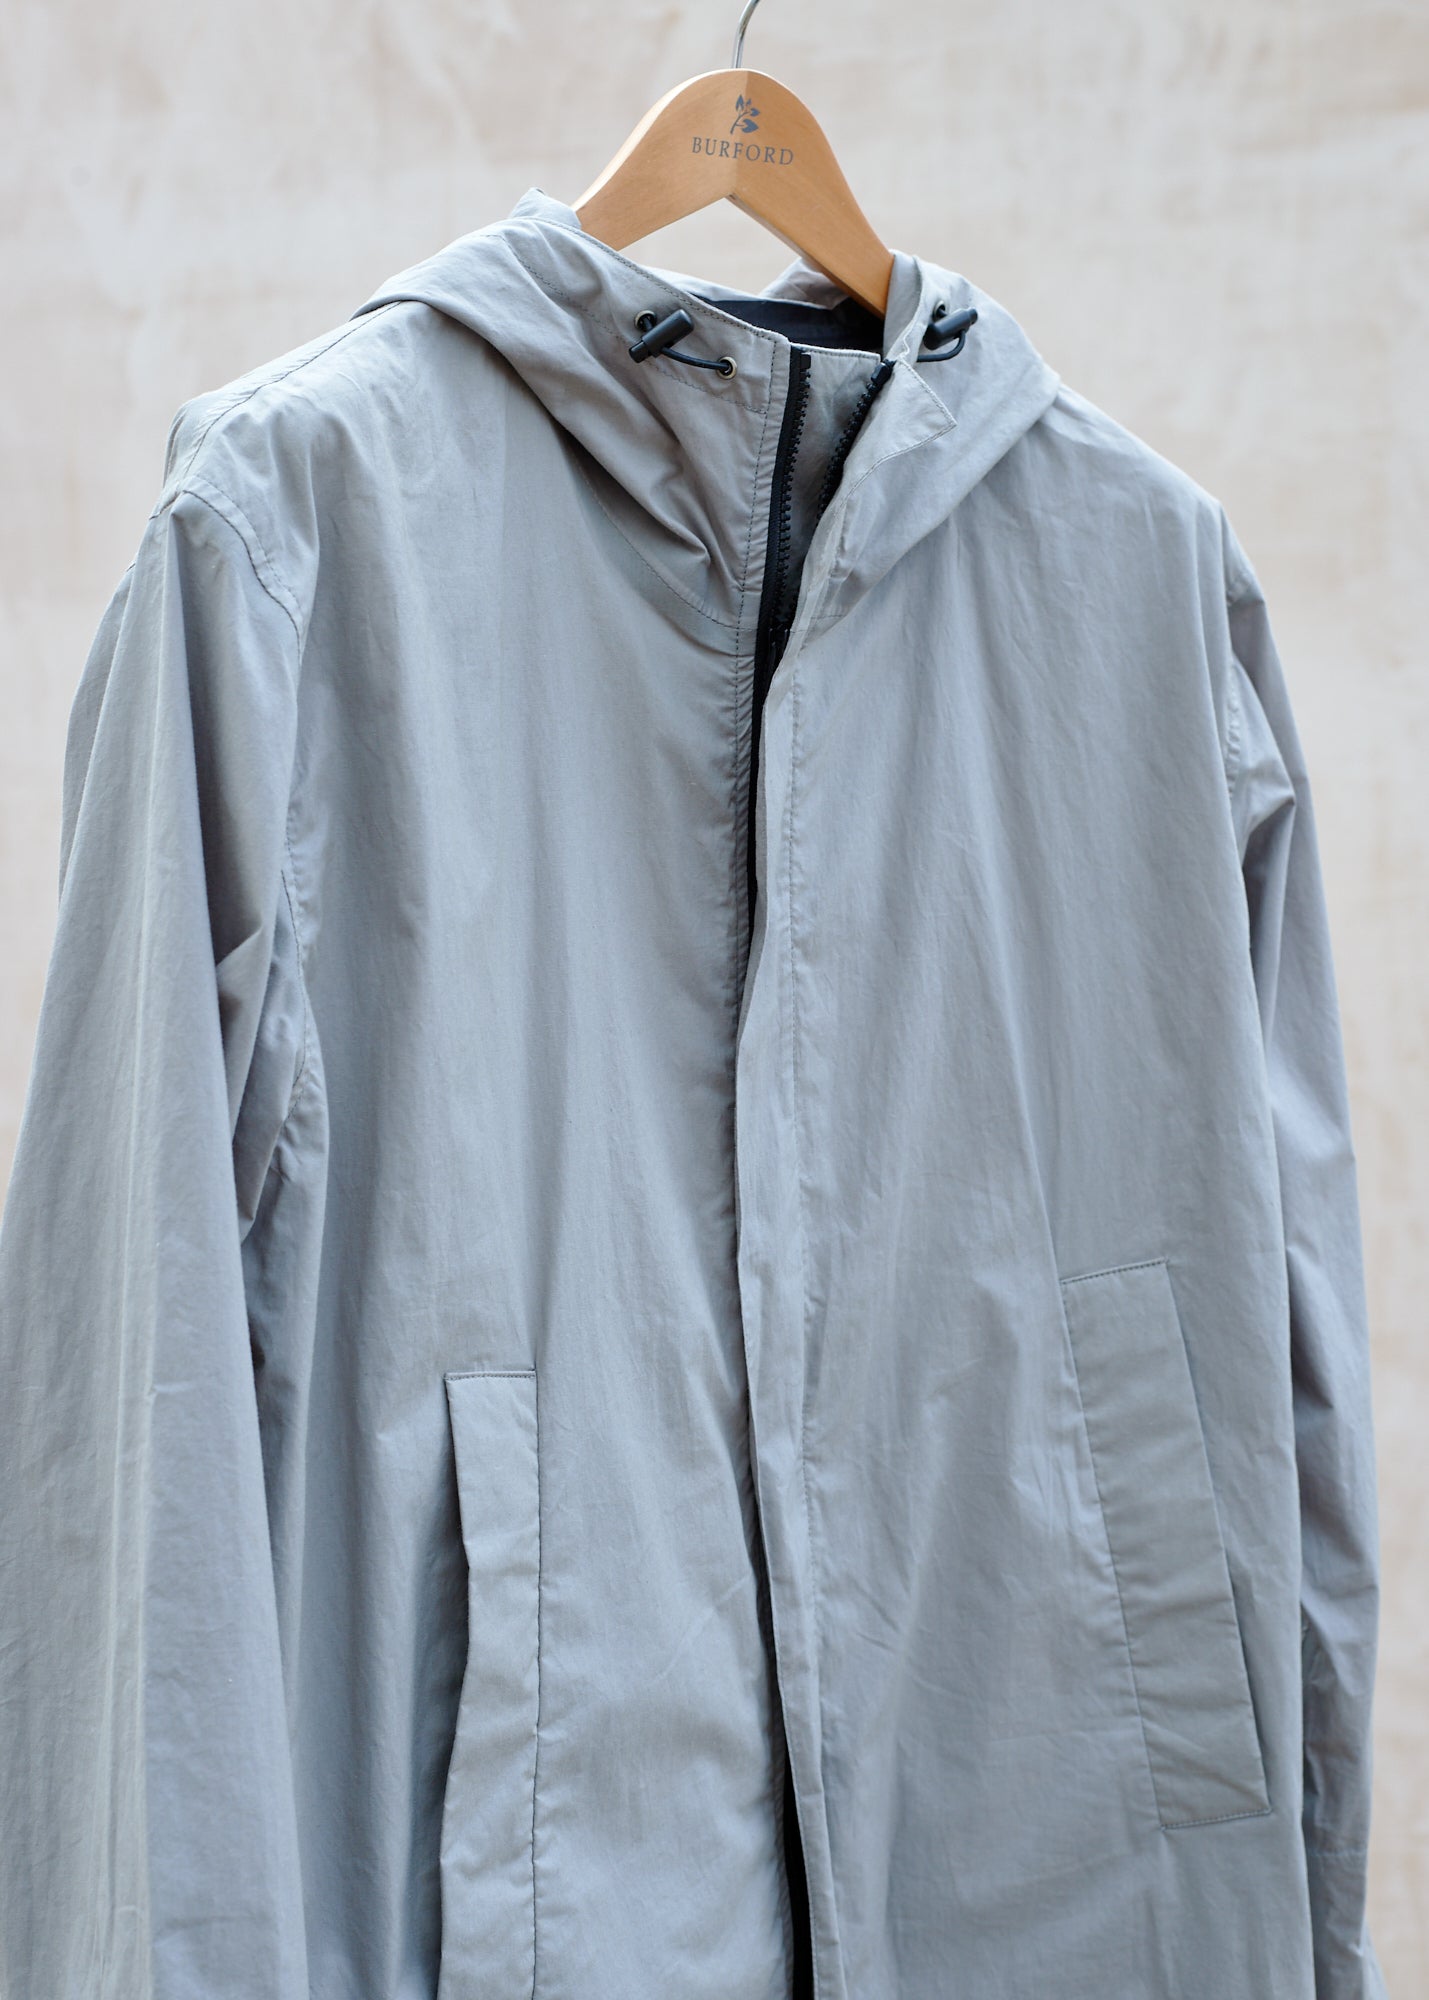 Margaret Howell Lightweight Grey Cotton Raincoat - S/M